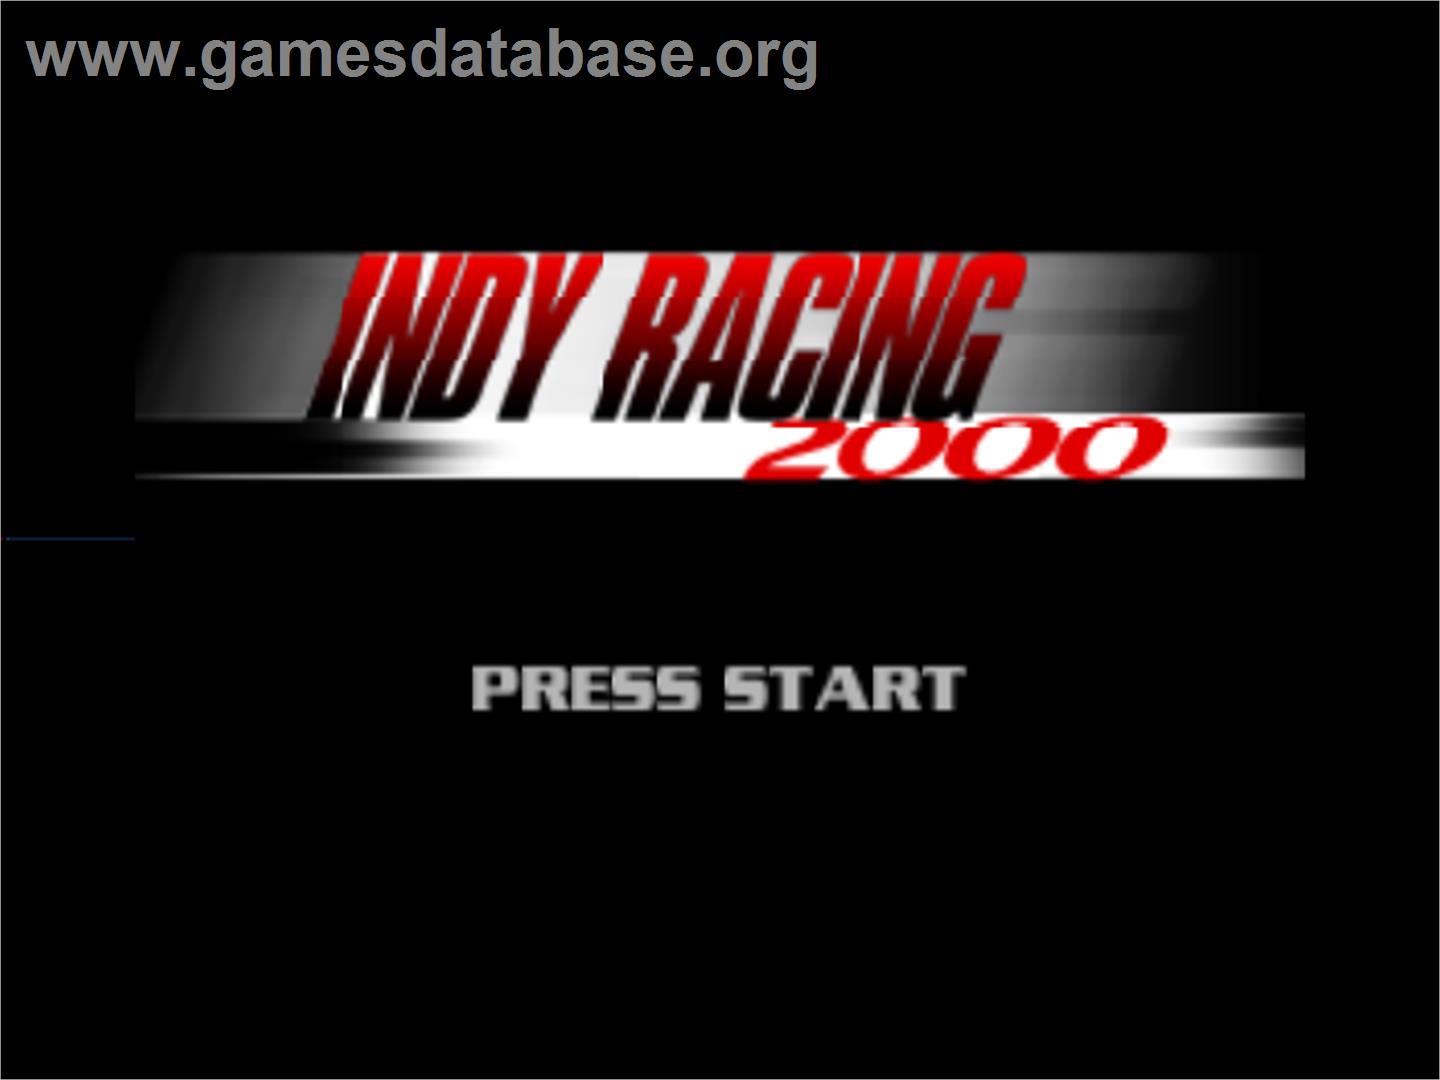 Indy Racing 2000 - Nintendo N64 - Artwork - Title Screen